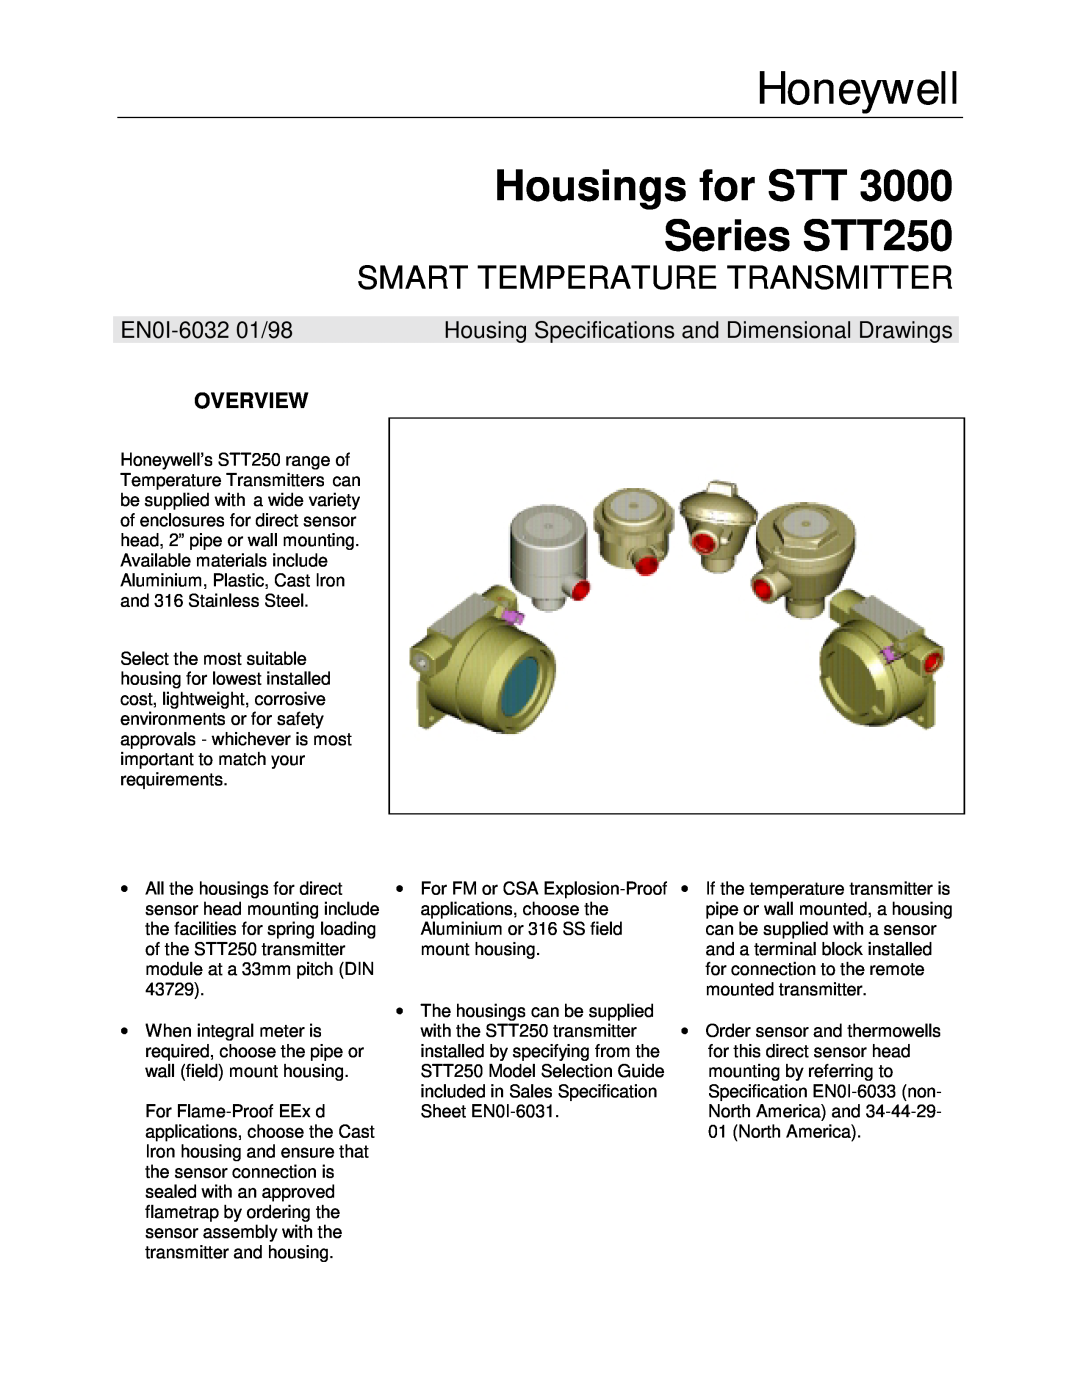 Honeywell specifications Overview, Honeywell, Housings for STT Series STT250, Smart Temperature Transmitter 